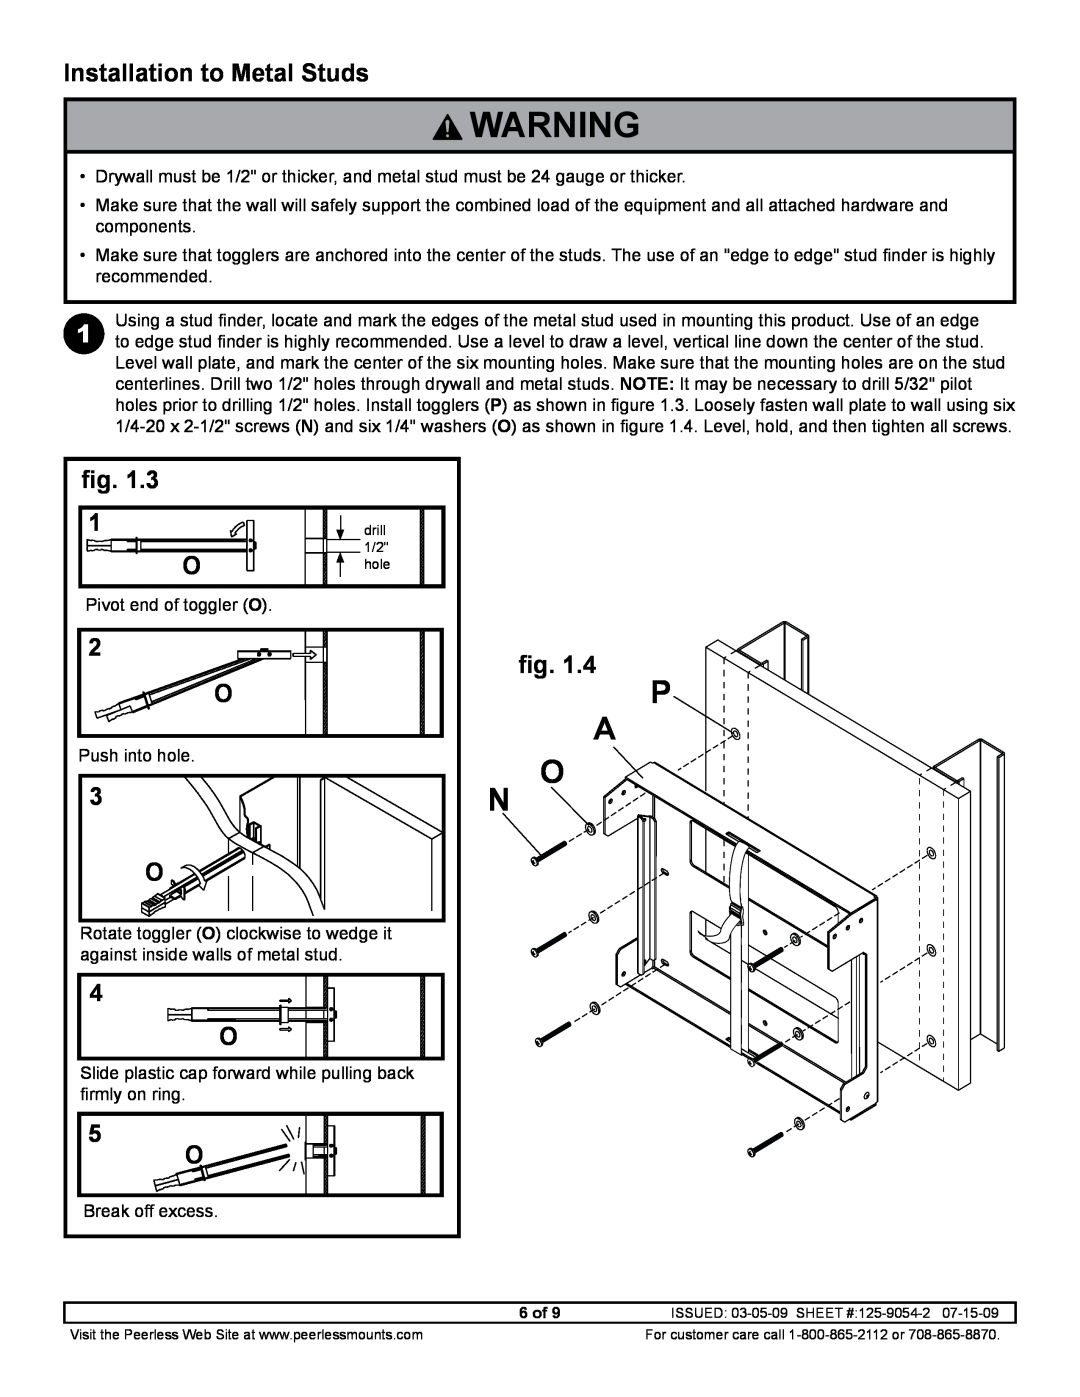 Peerless Industries DS508 manual Installation to Metal Studs, fig 